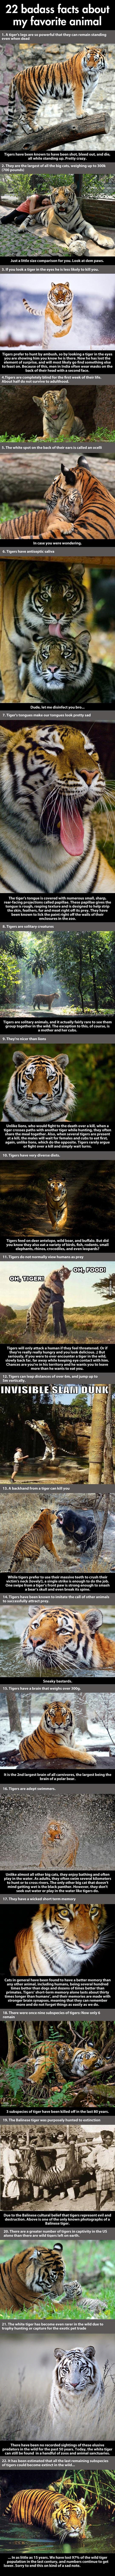 22 badass facts about tiger, animals, dyk